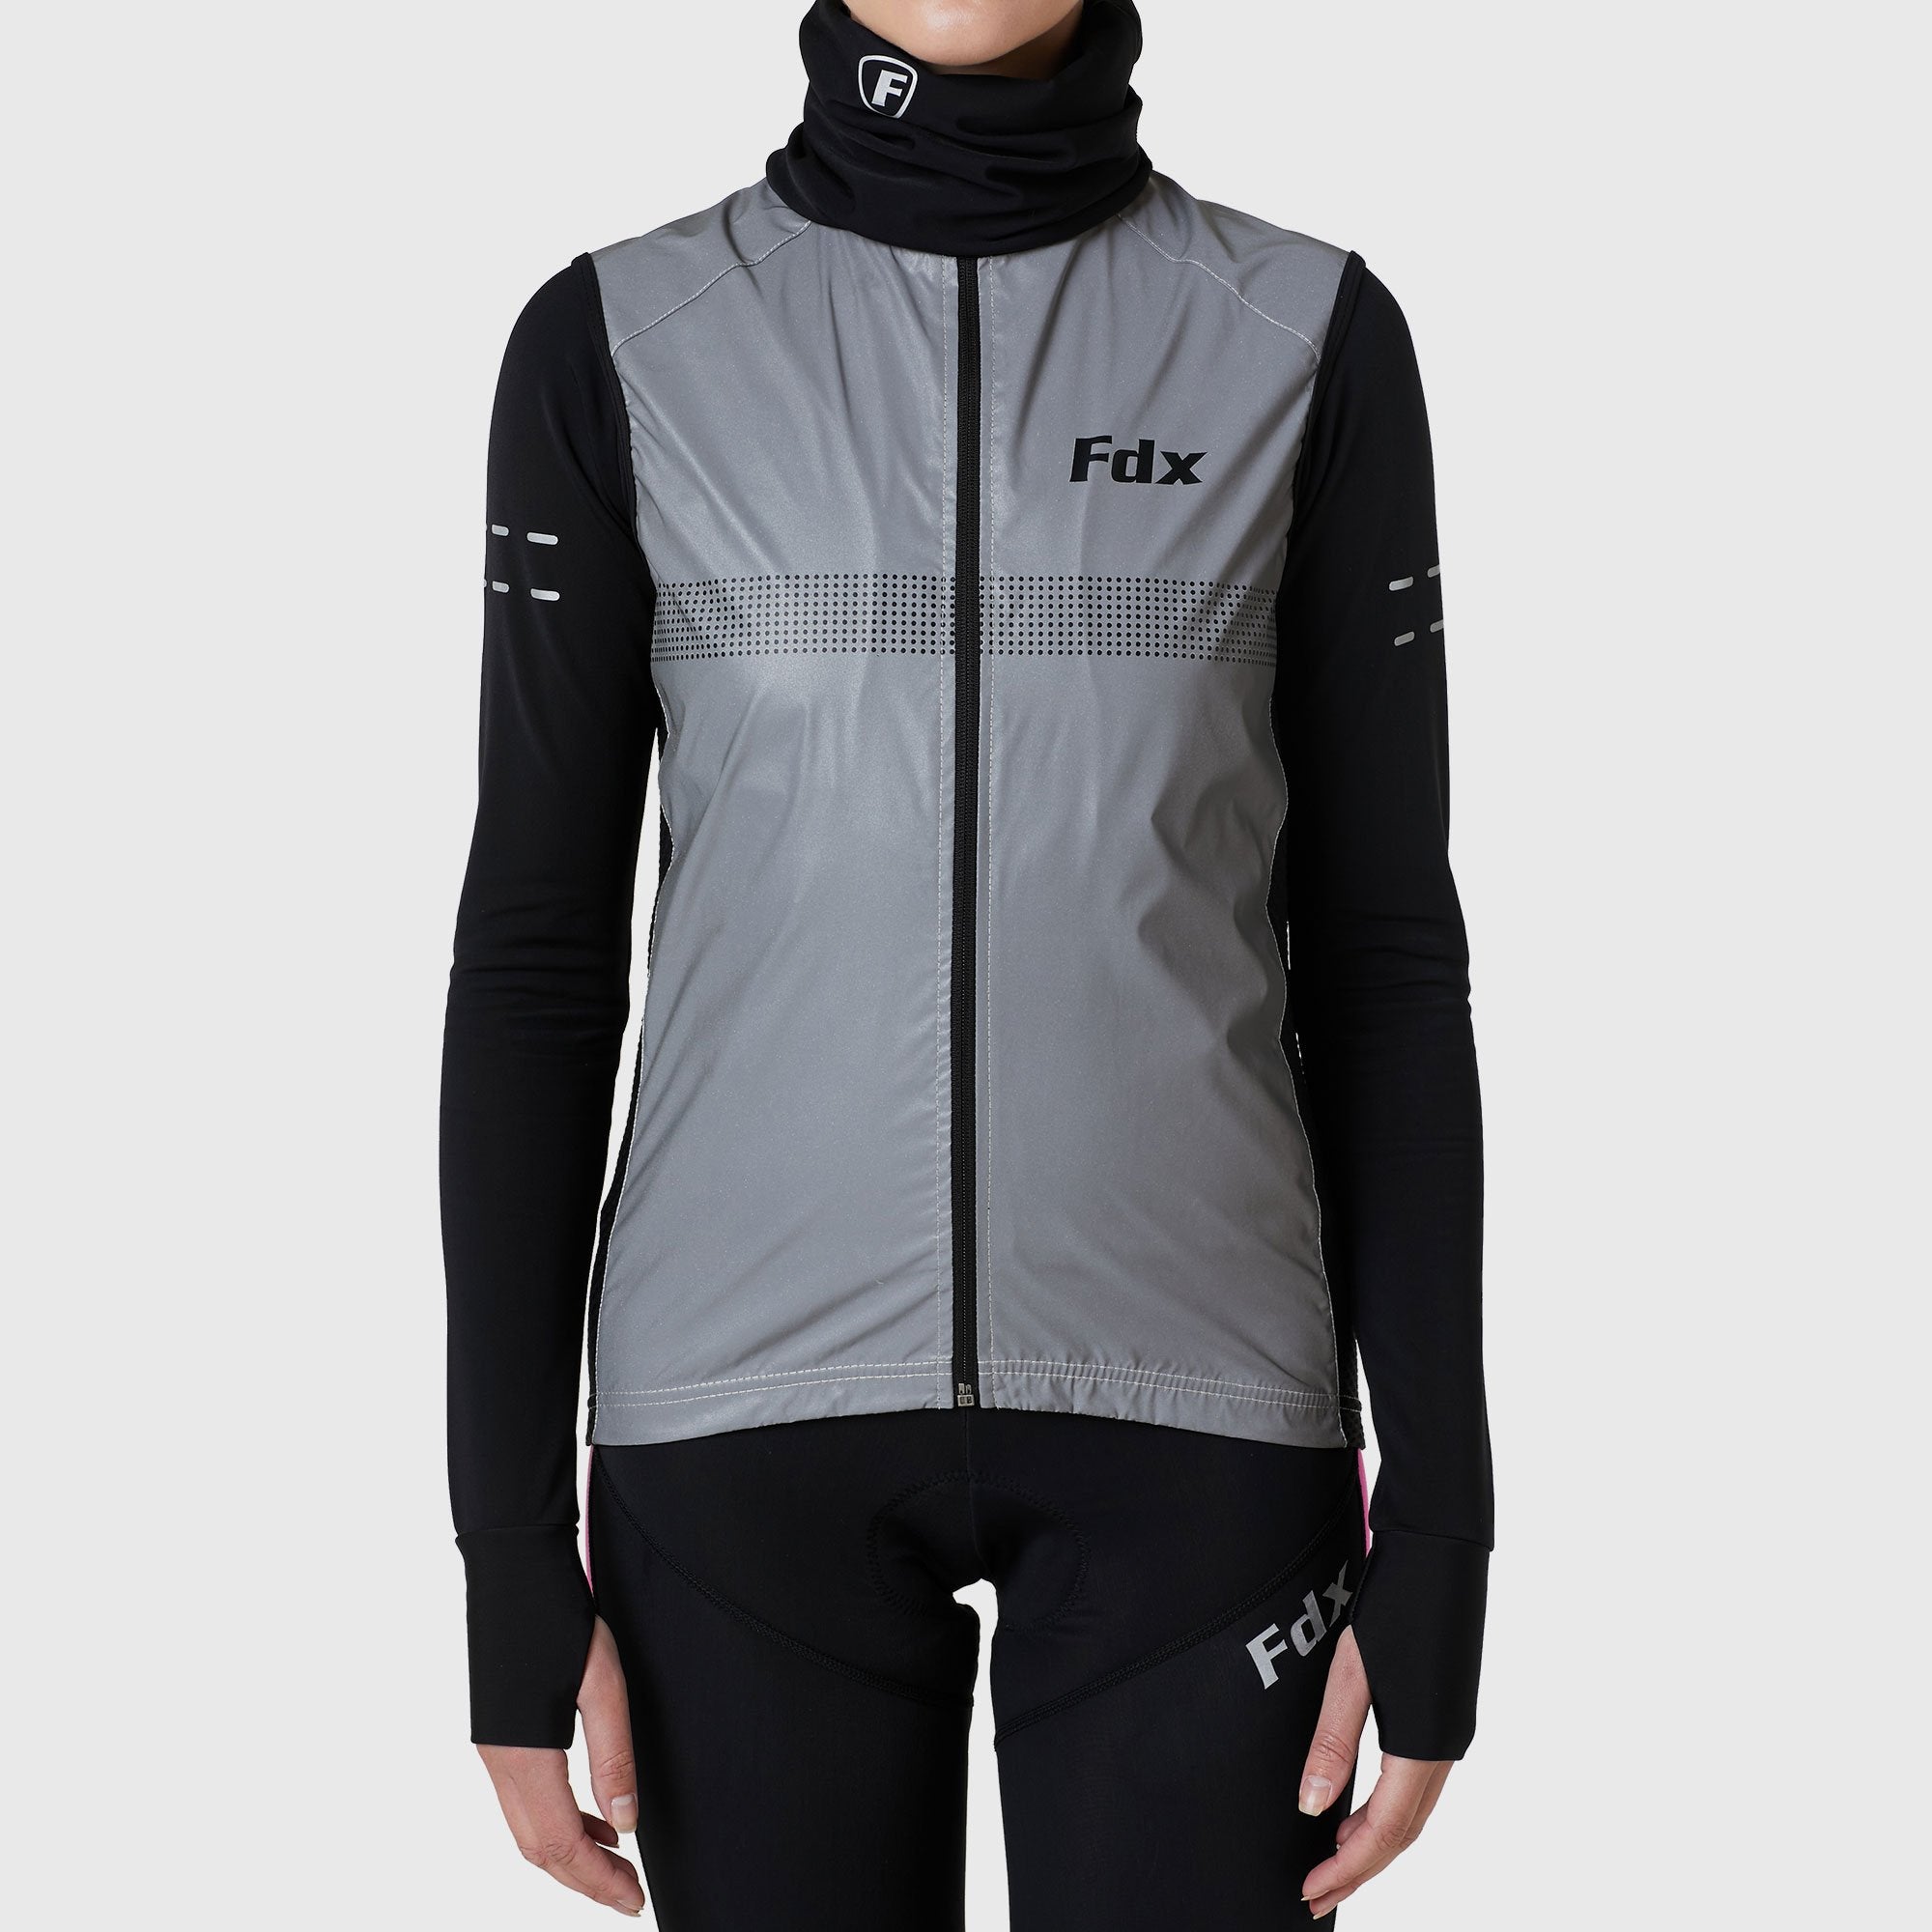 Fdx 360 Hi-Vis Reflective Grey Women's Gilet for Cycling & Running